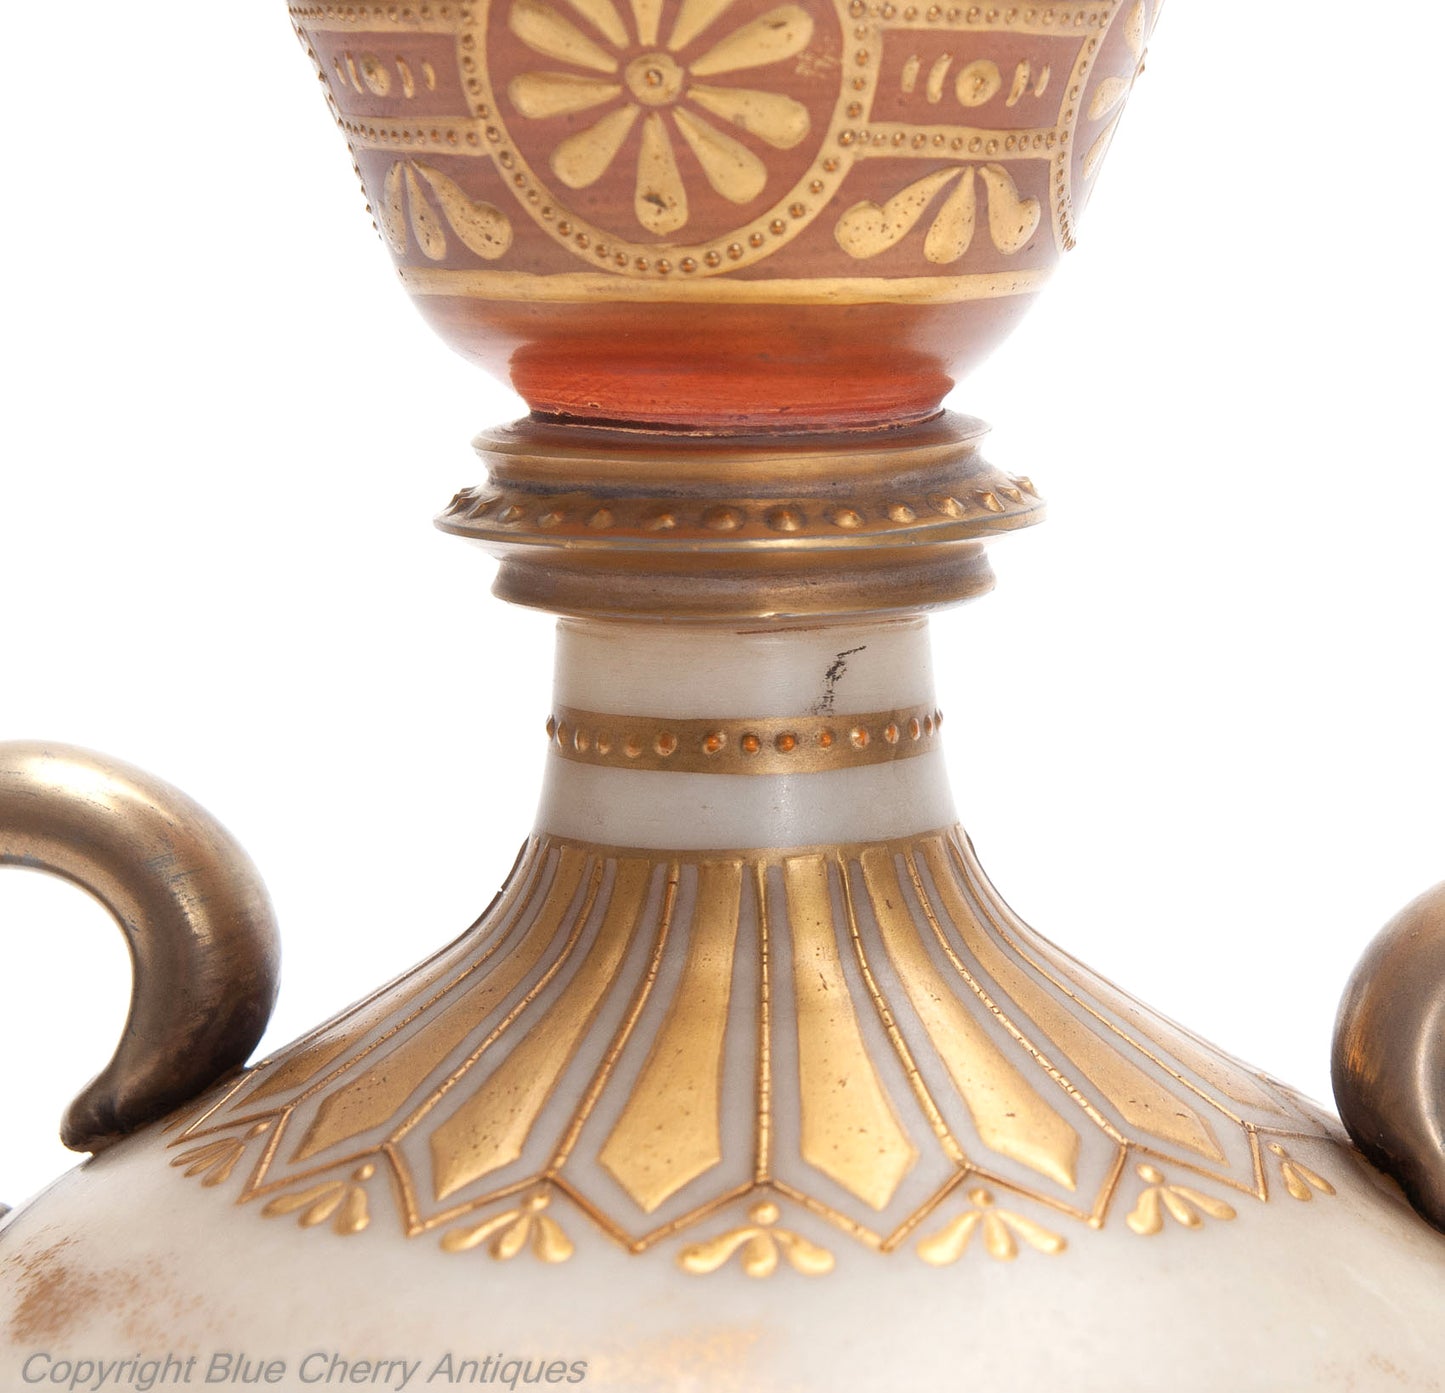 Antique Harrach / Stourbridge Middle Eastern Inspired Hand Painted Milk Glass Vase (Code 2018)